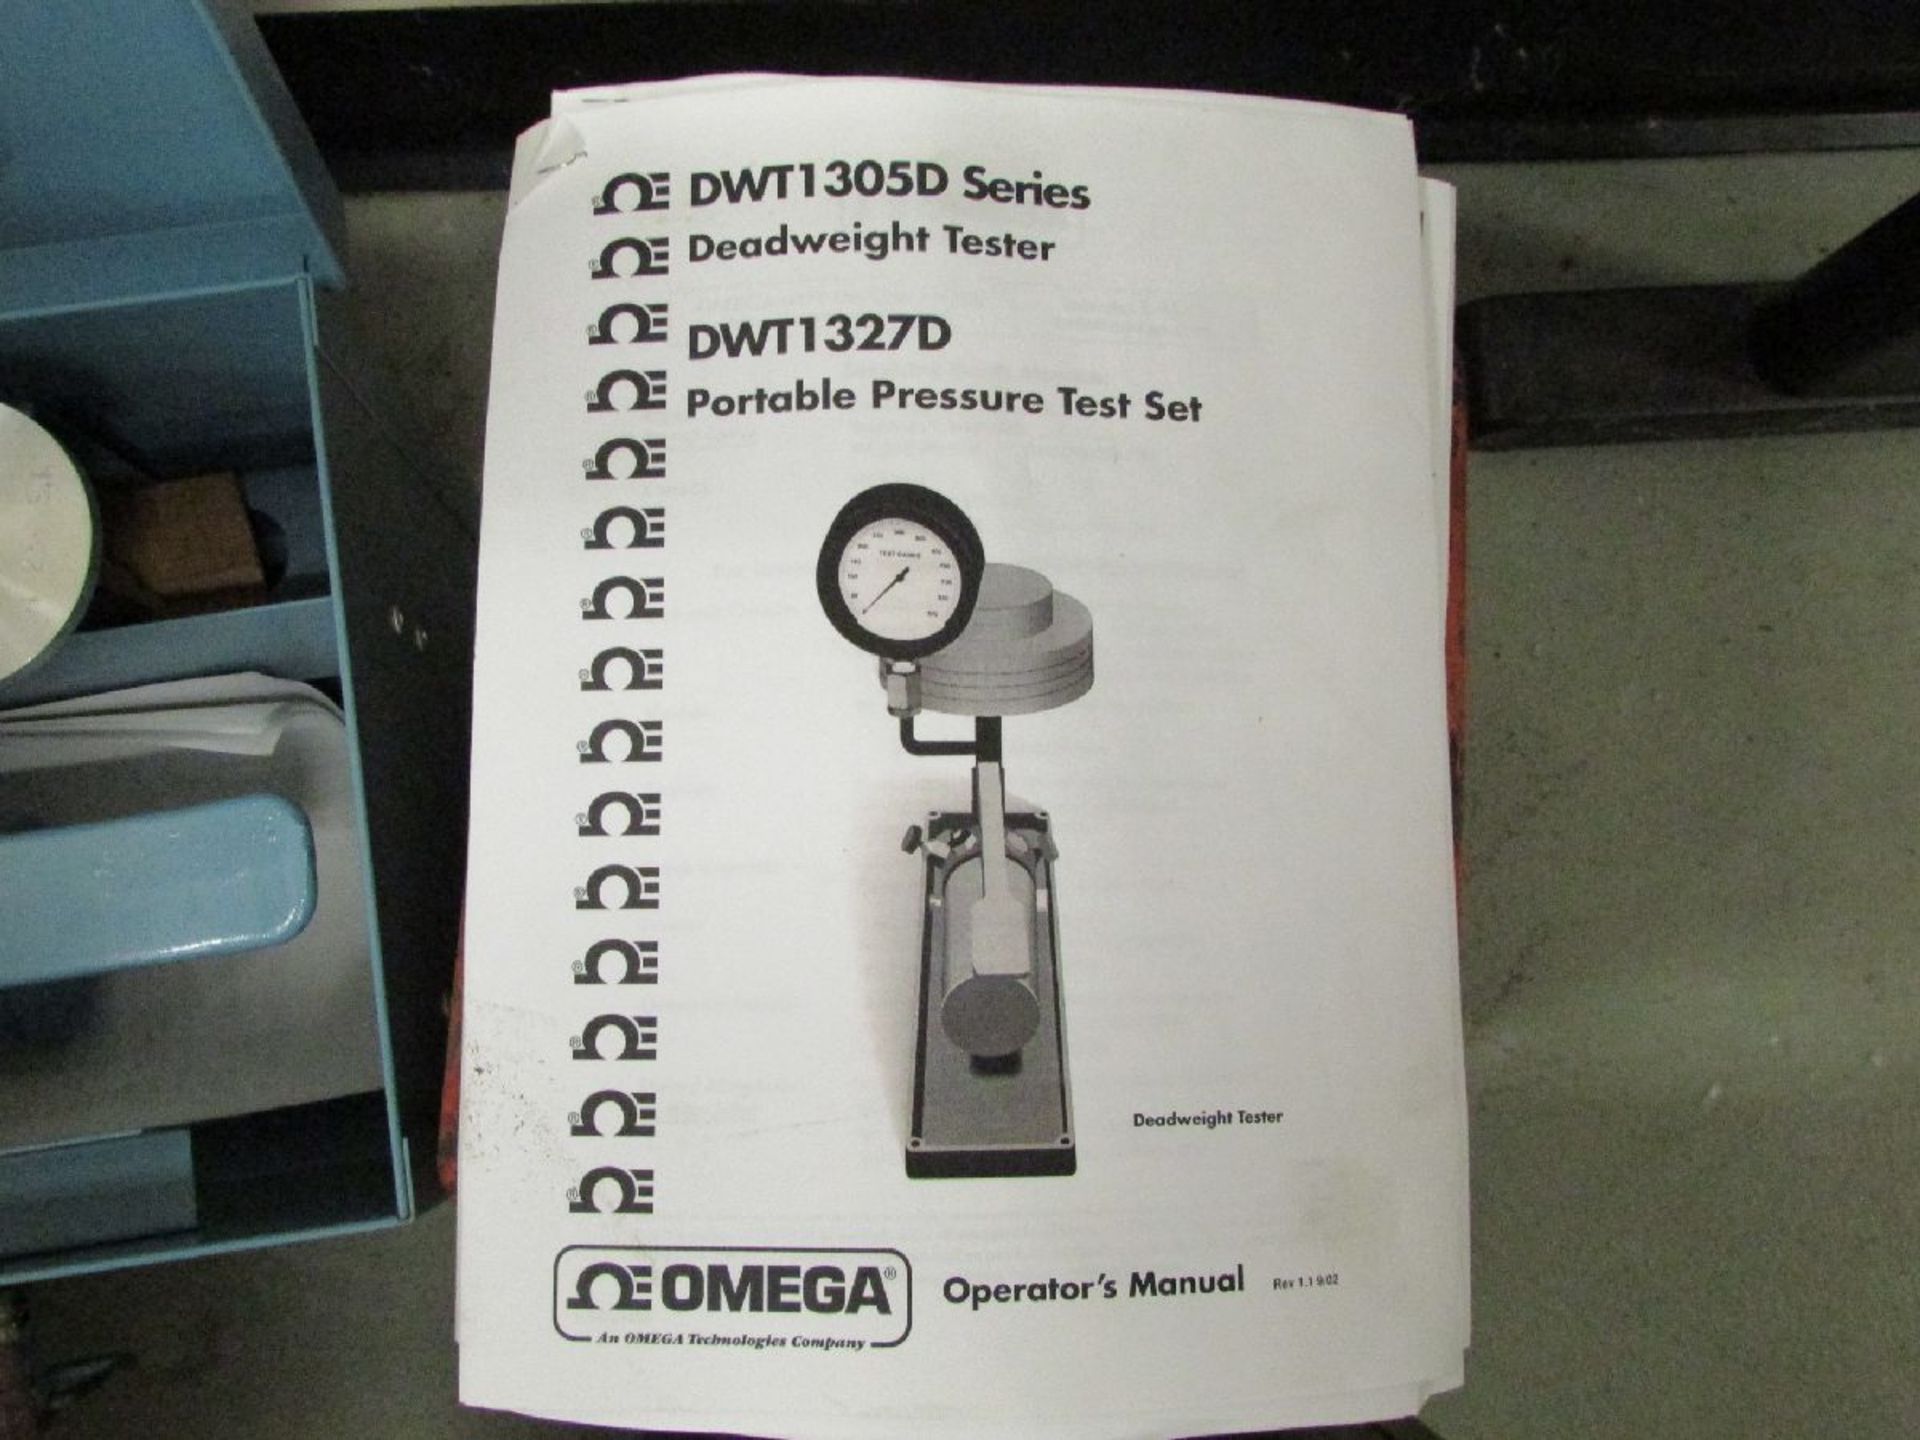 Omega Model DWT 1305D 3,000 Lb. Dead Weight Tester - Image 3 of 3